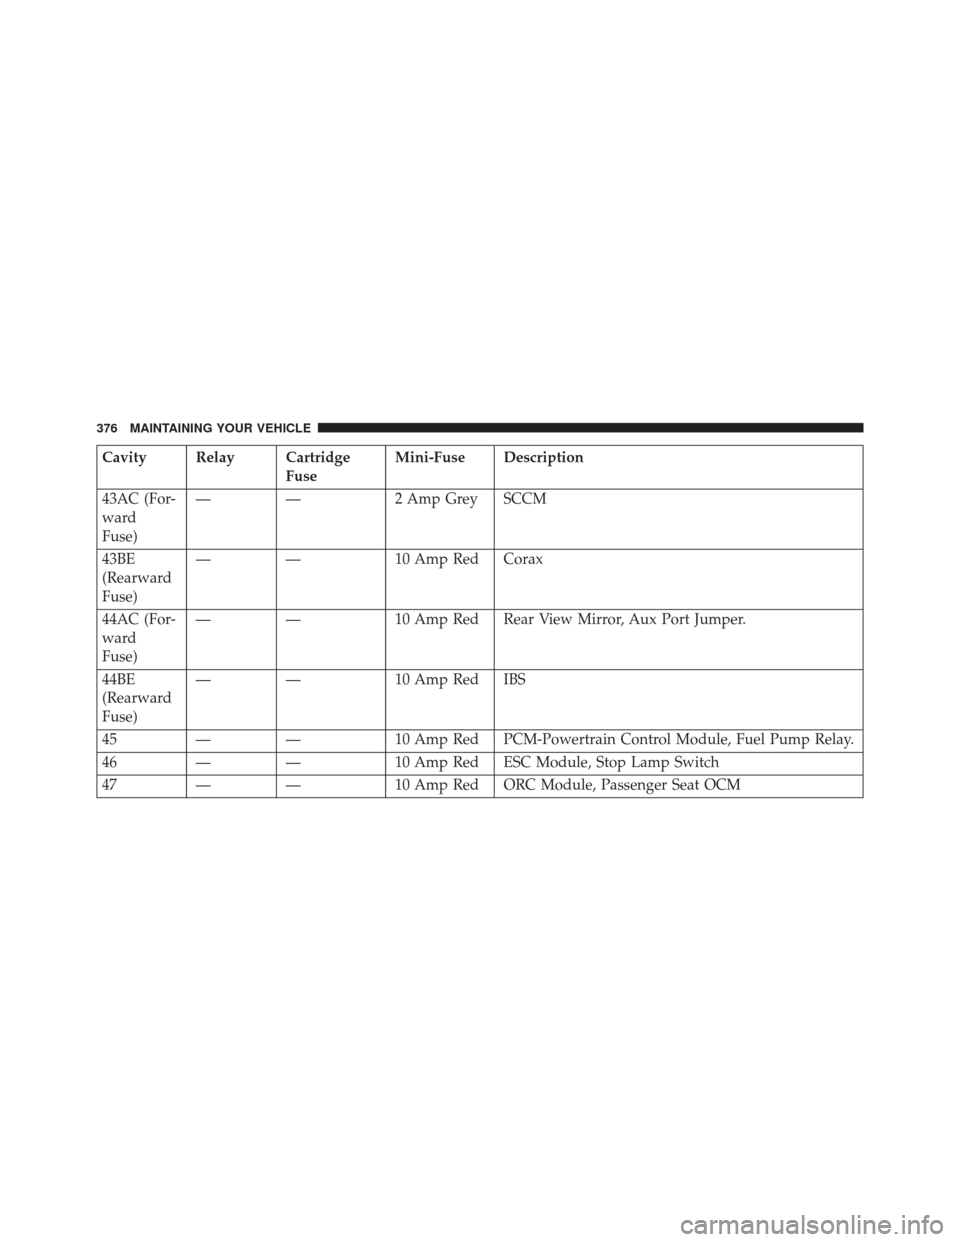 DODGE VIPER SRT 2016 VX / 3.G Owners Manual Cavity Relay CartridgeFuseMini-Fuse Description
43AC (For-
ward
Fuse) — — 2 Amp Grey SCCM
43BE
(Rearward
Fuse) — — 10 Amp Red Corax
44AC (For-
ward
Fuse) — — 10 Amp Red Rear View Mirror, A